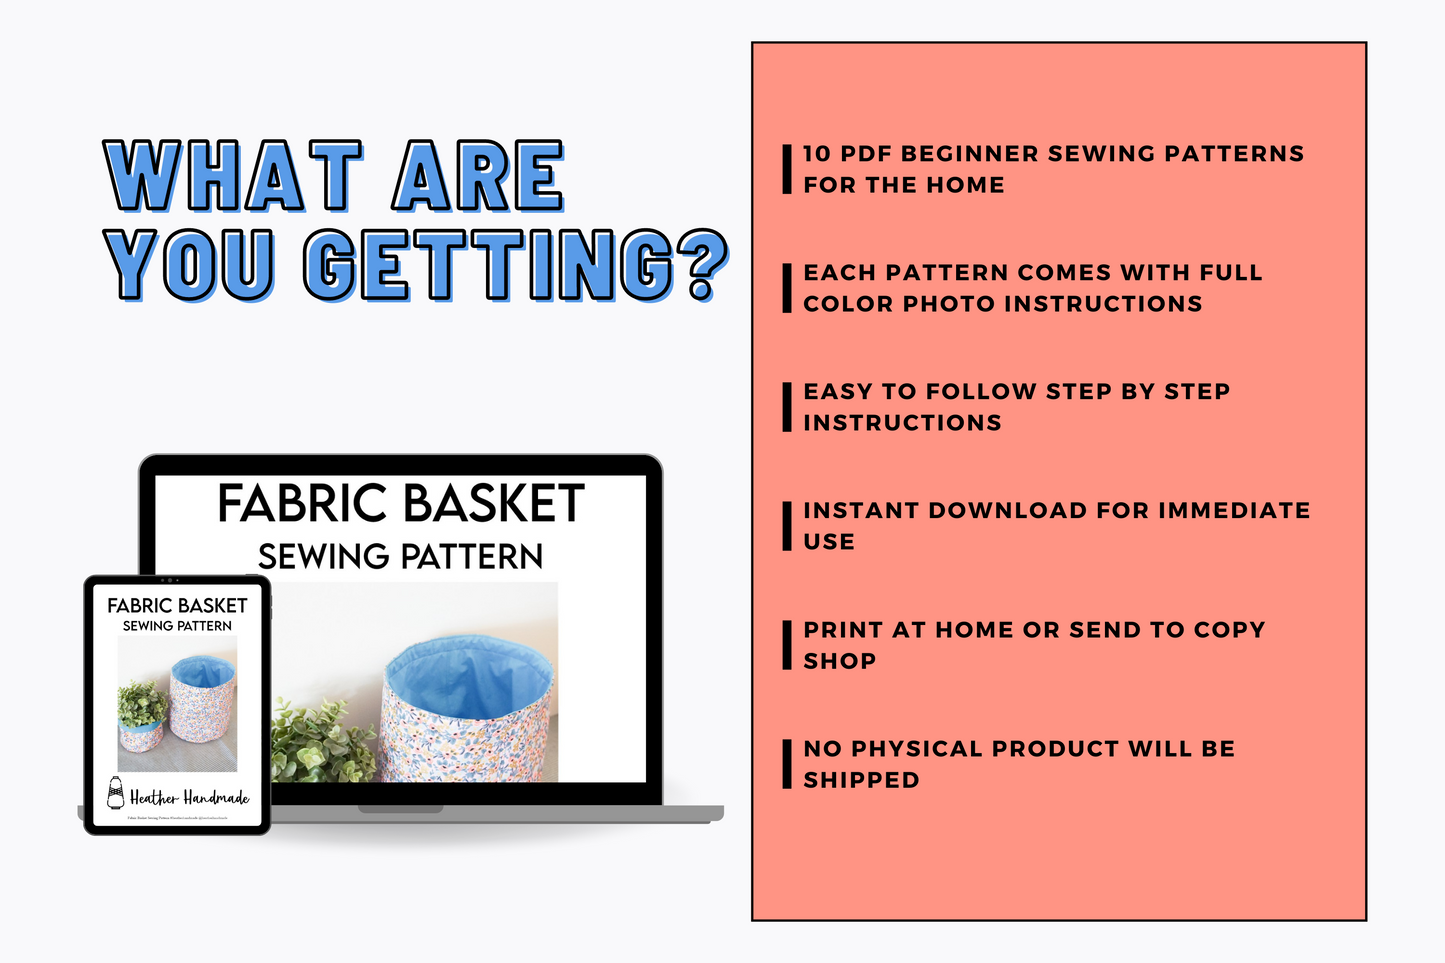 Home Sewing Patterns Bundle